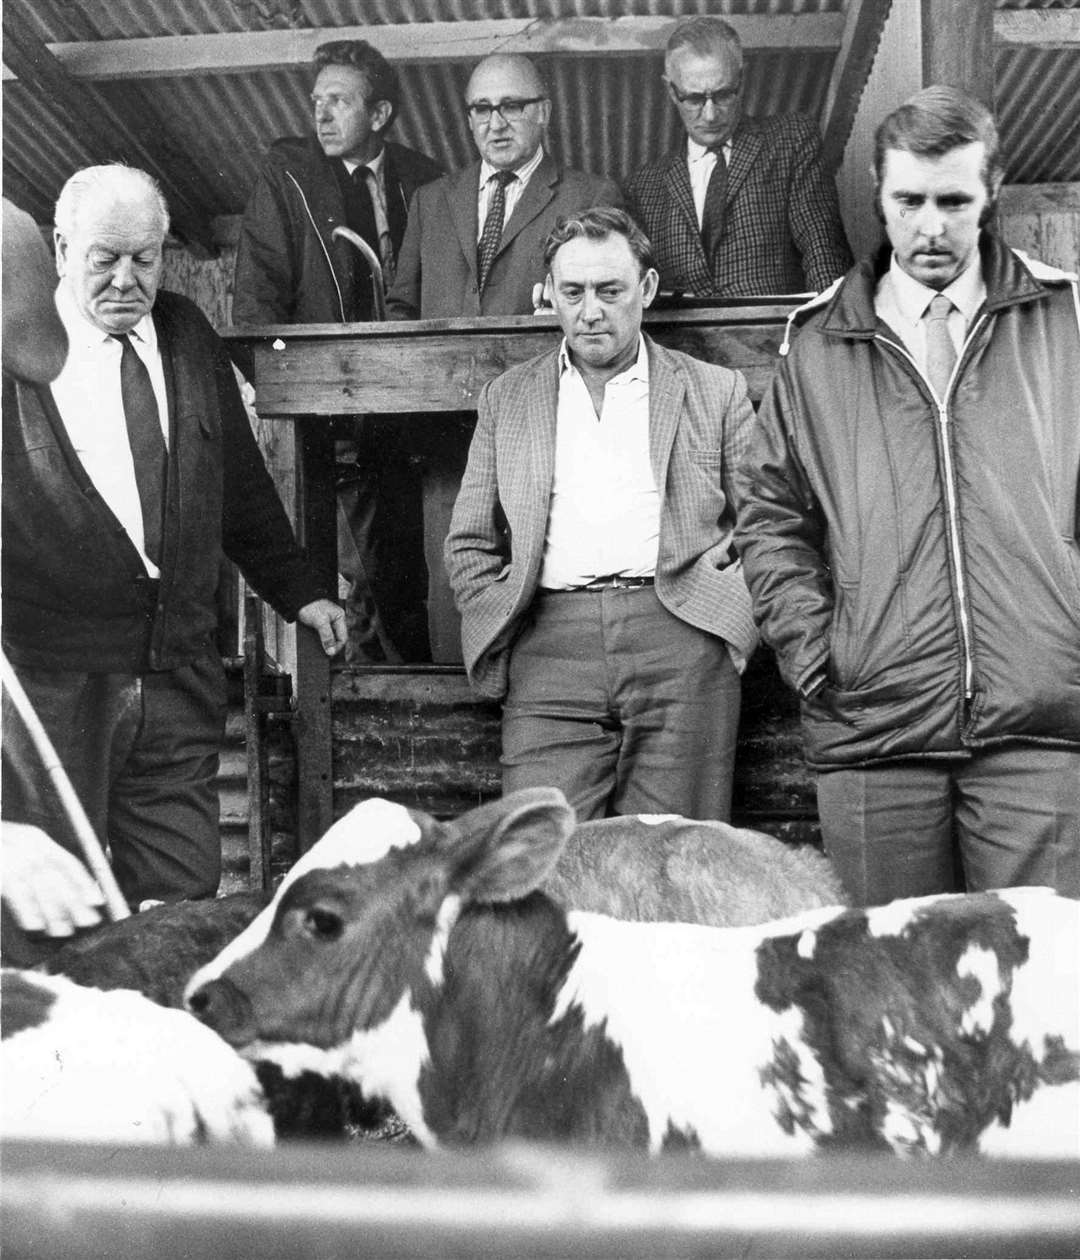 Bob Burns, centre back, conducts the last cattle market at Tonbridge Cattle Market in 1971